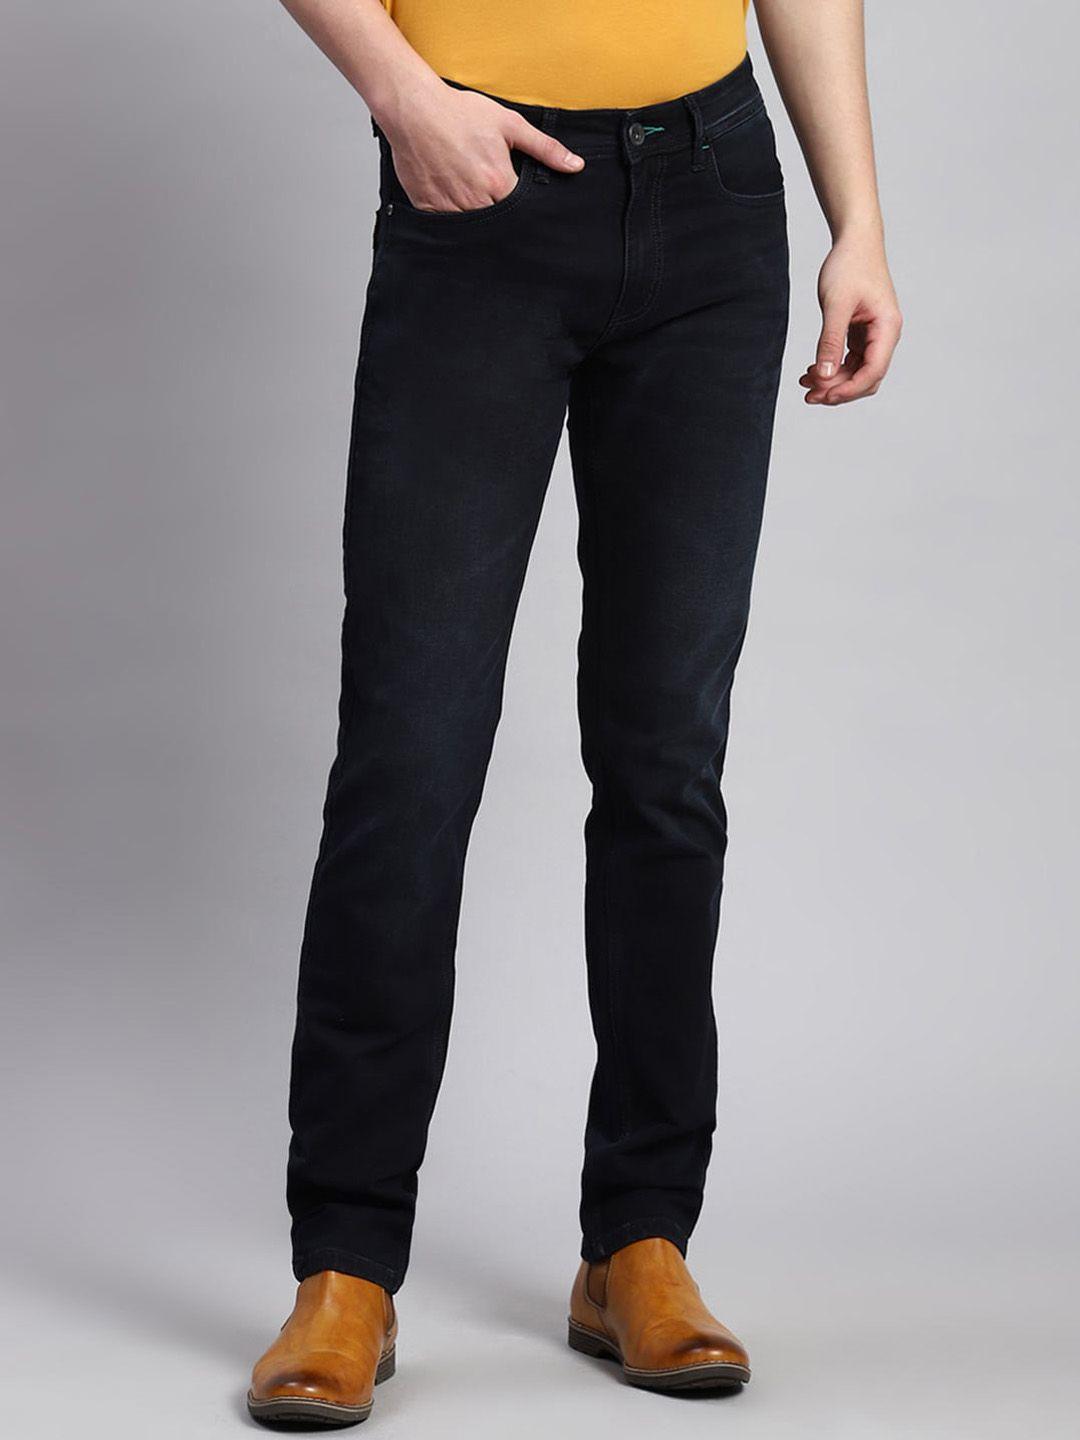 monte-carlo-men-clean-look-narrow-jeans